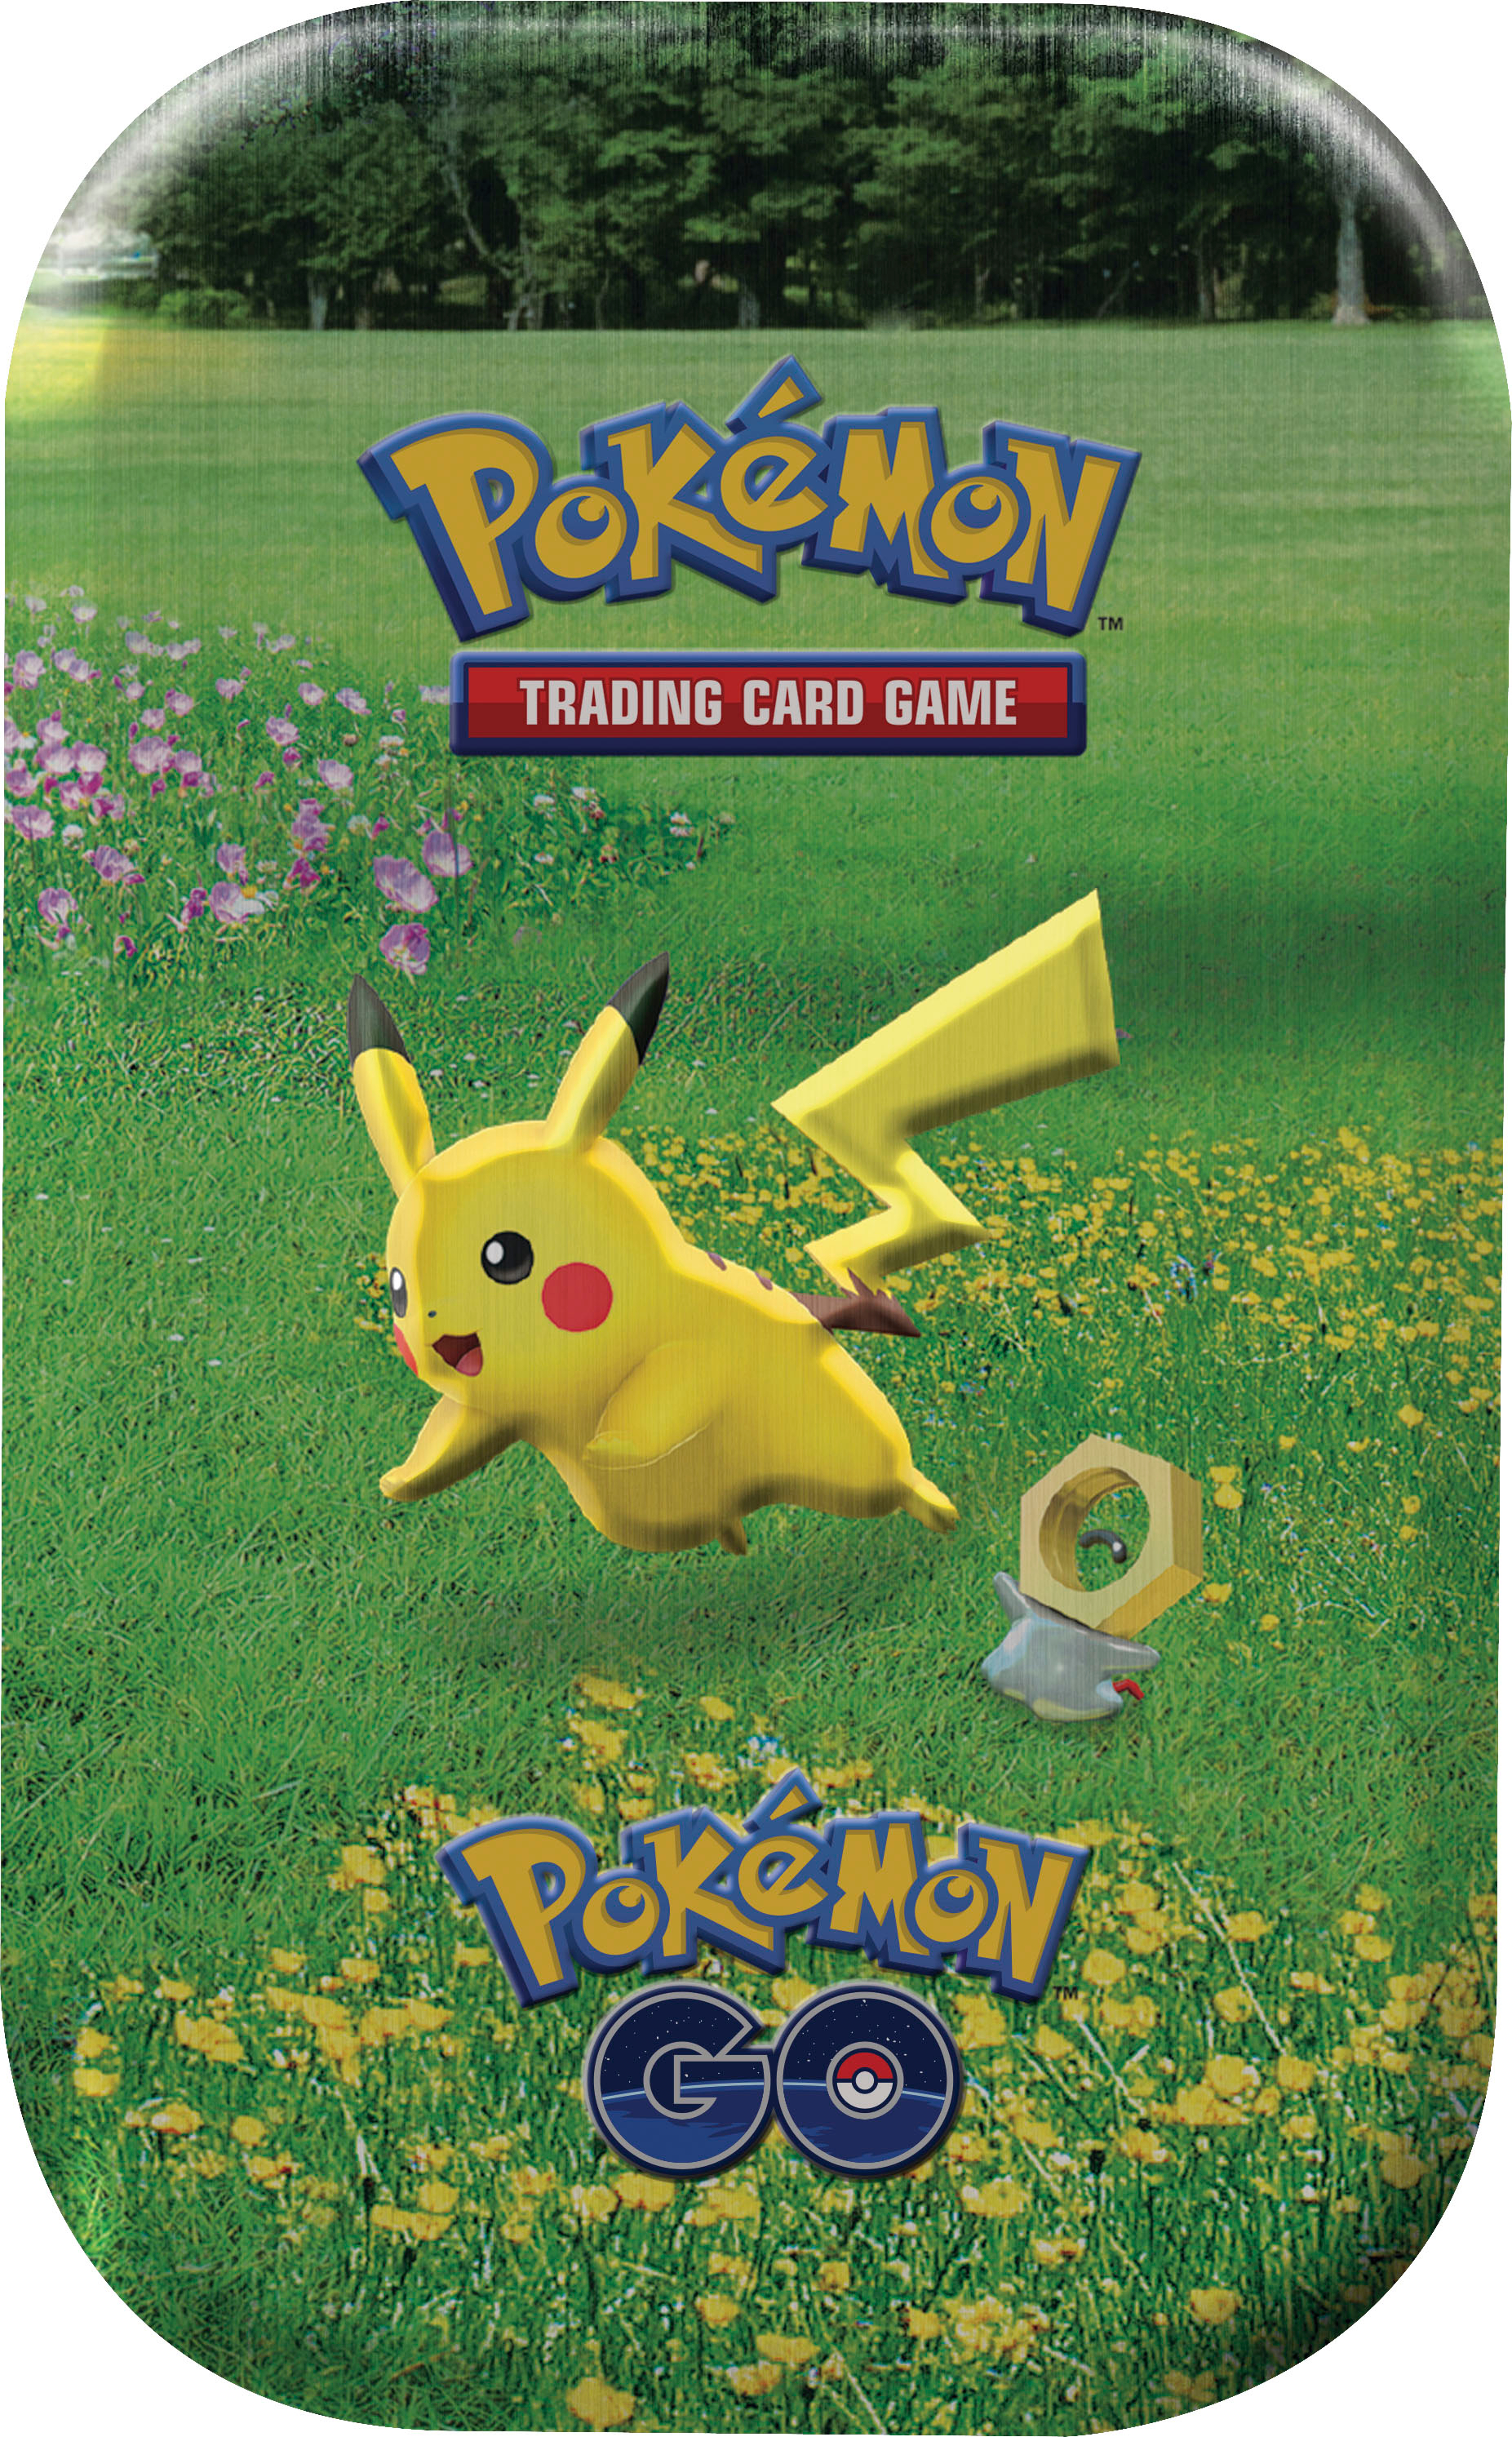 Pokémon Trading Card Game: Pokemon GO Mini Tins Styles May Vary - Best Buy